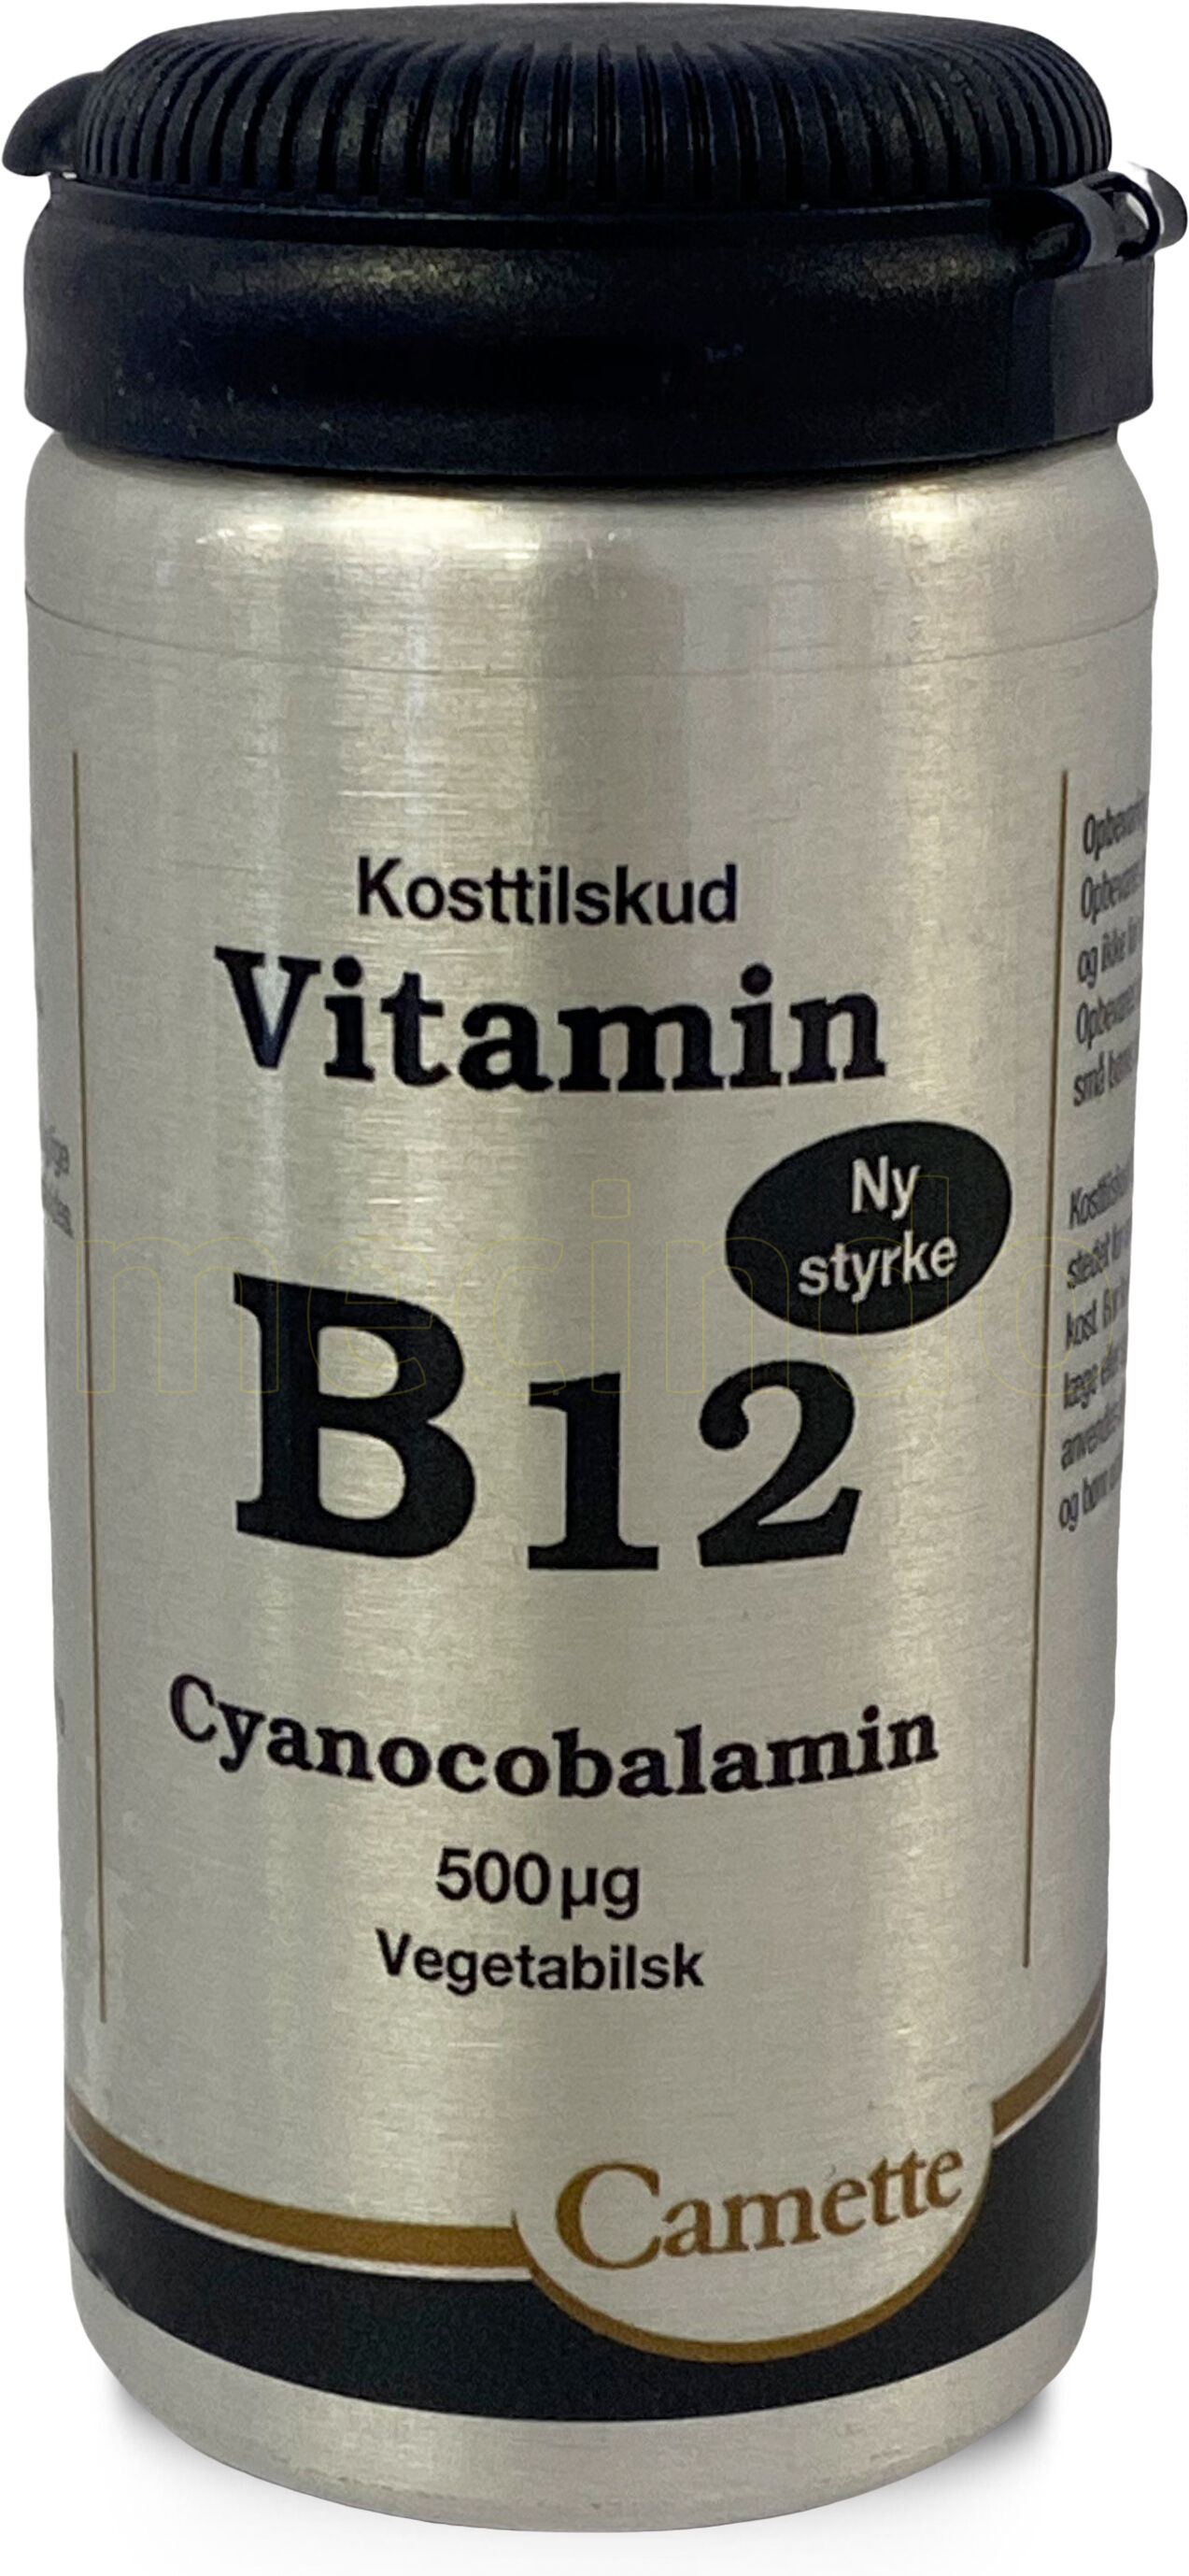 Camette B12 Vitamin 500 Mcg Cyanocobalamin - 90 Tablett